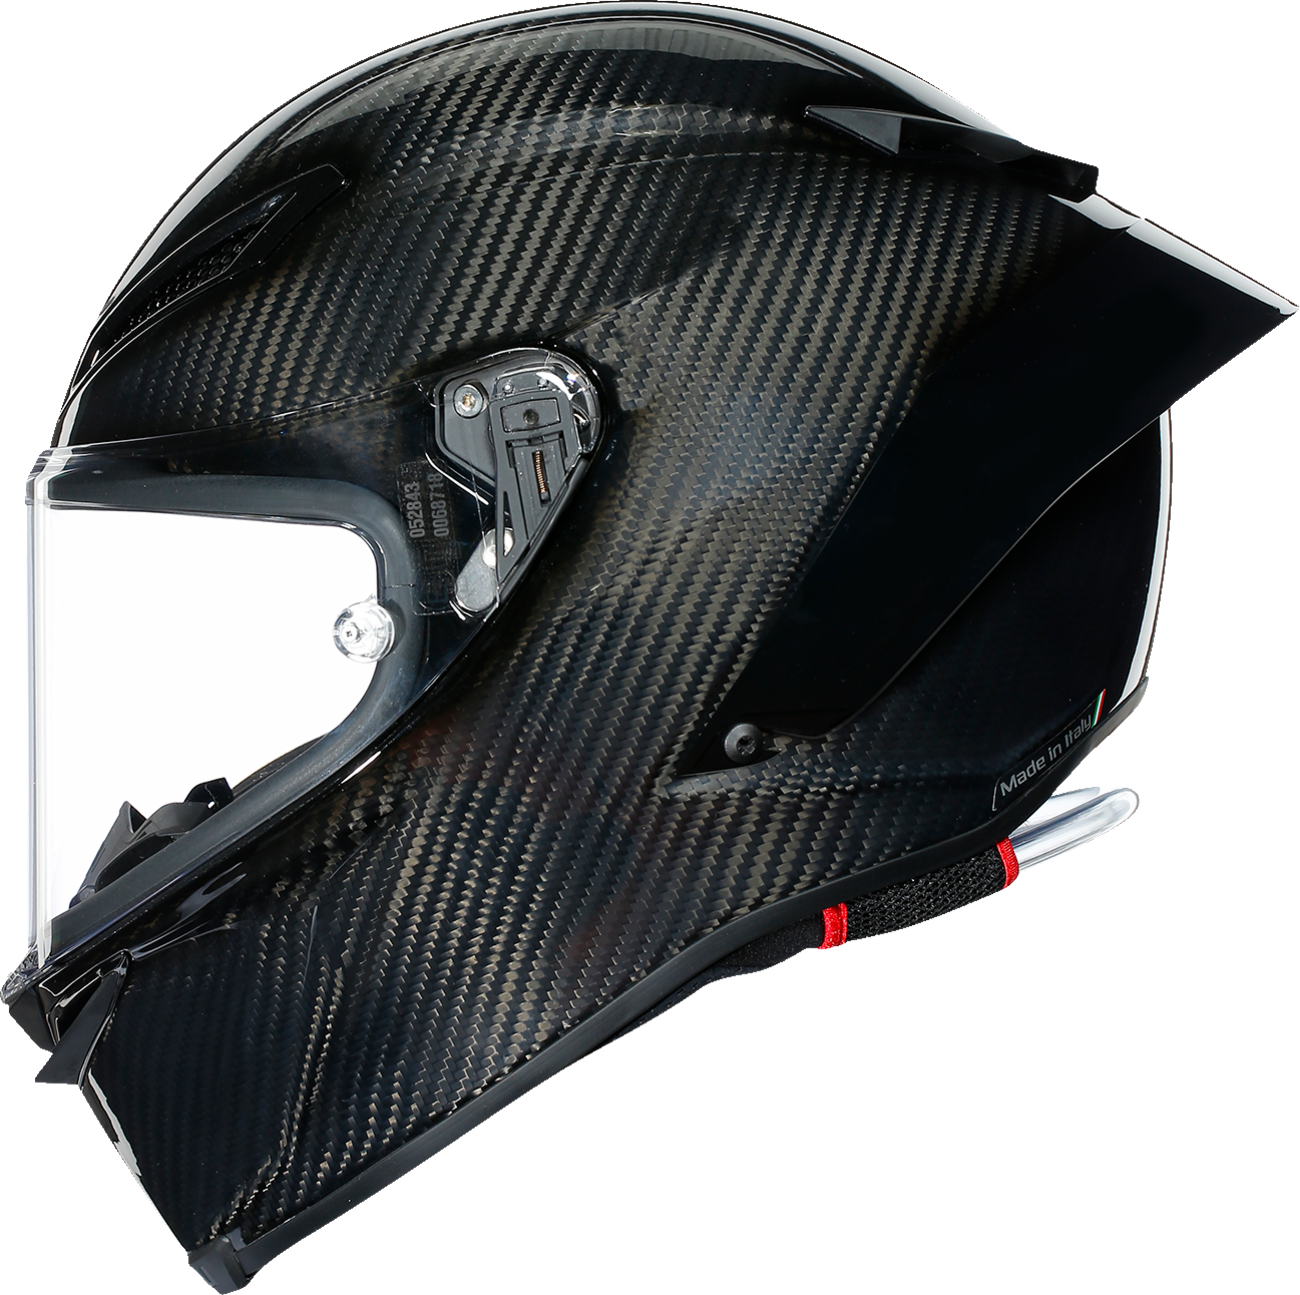 AGV Pista GP RR Helmet - Glossy Carbon - Medium 2118356002008M